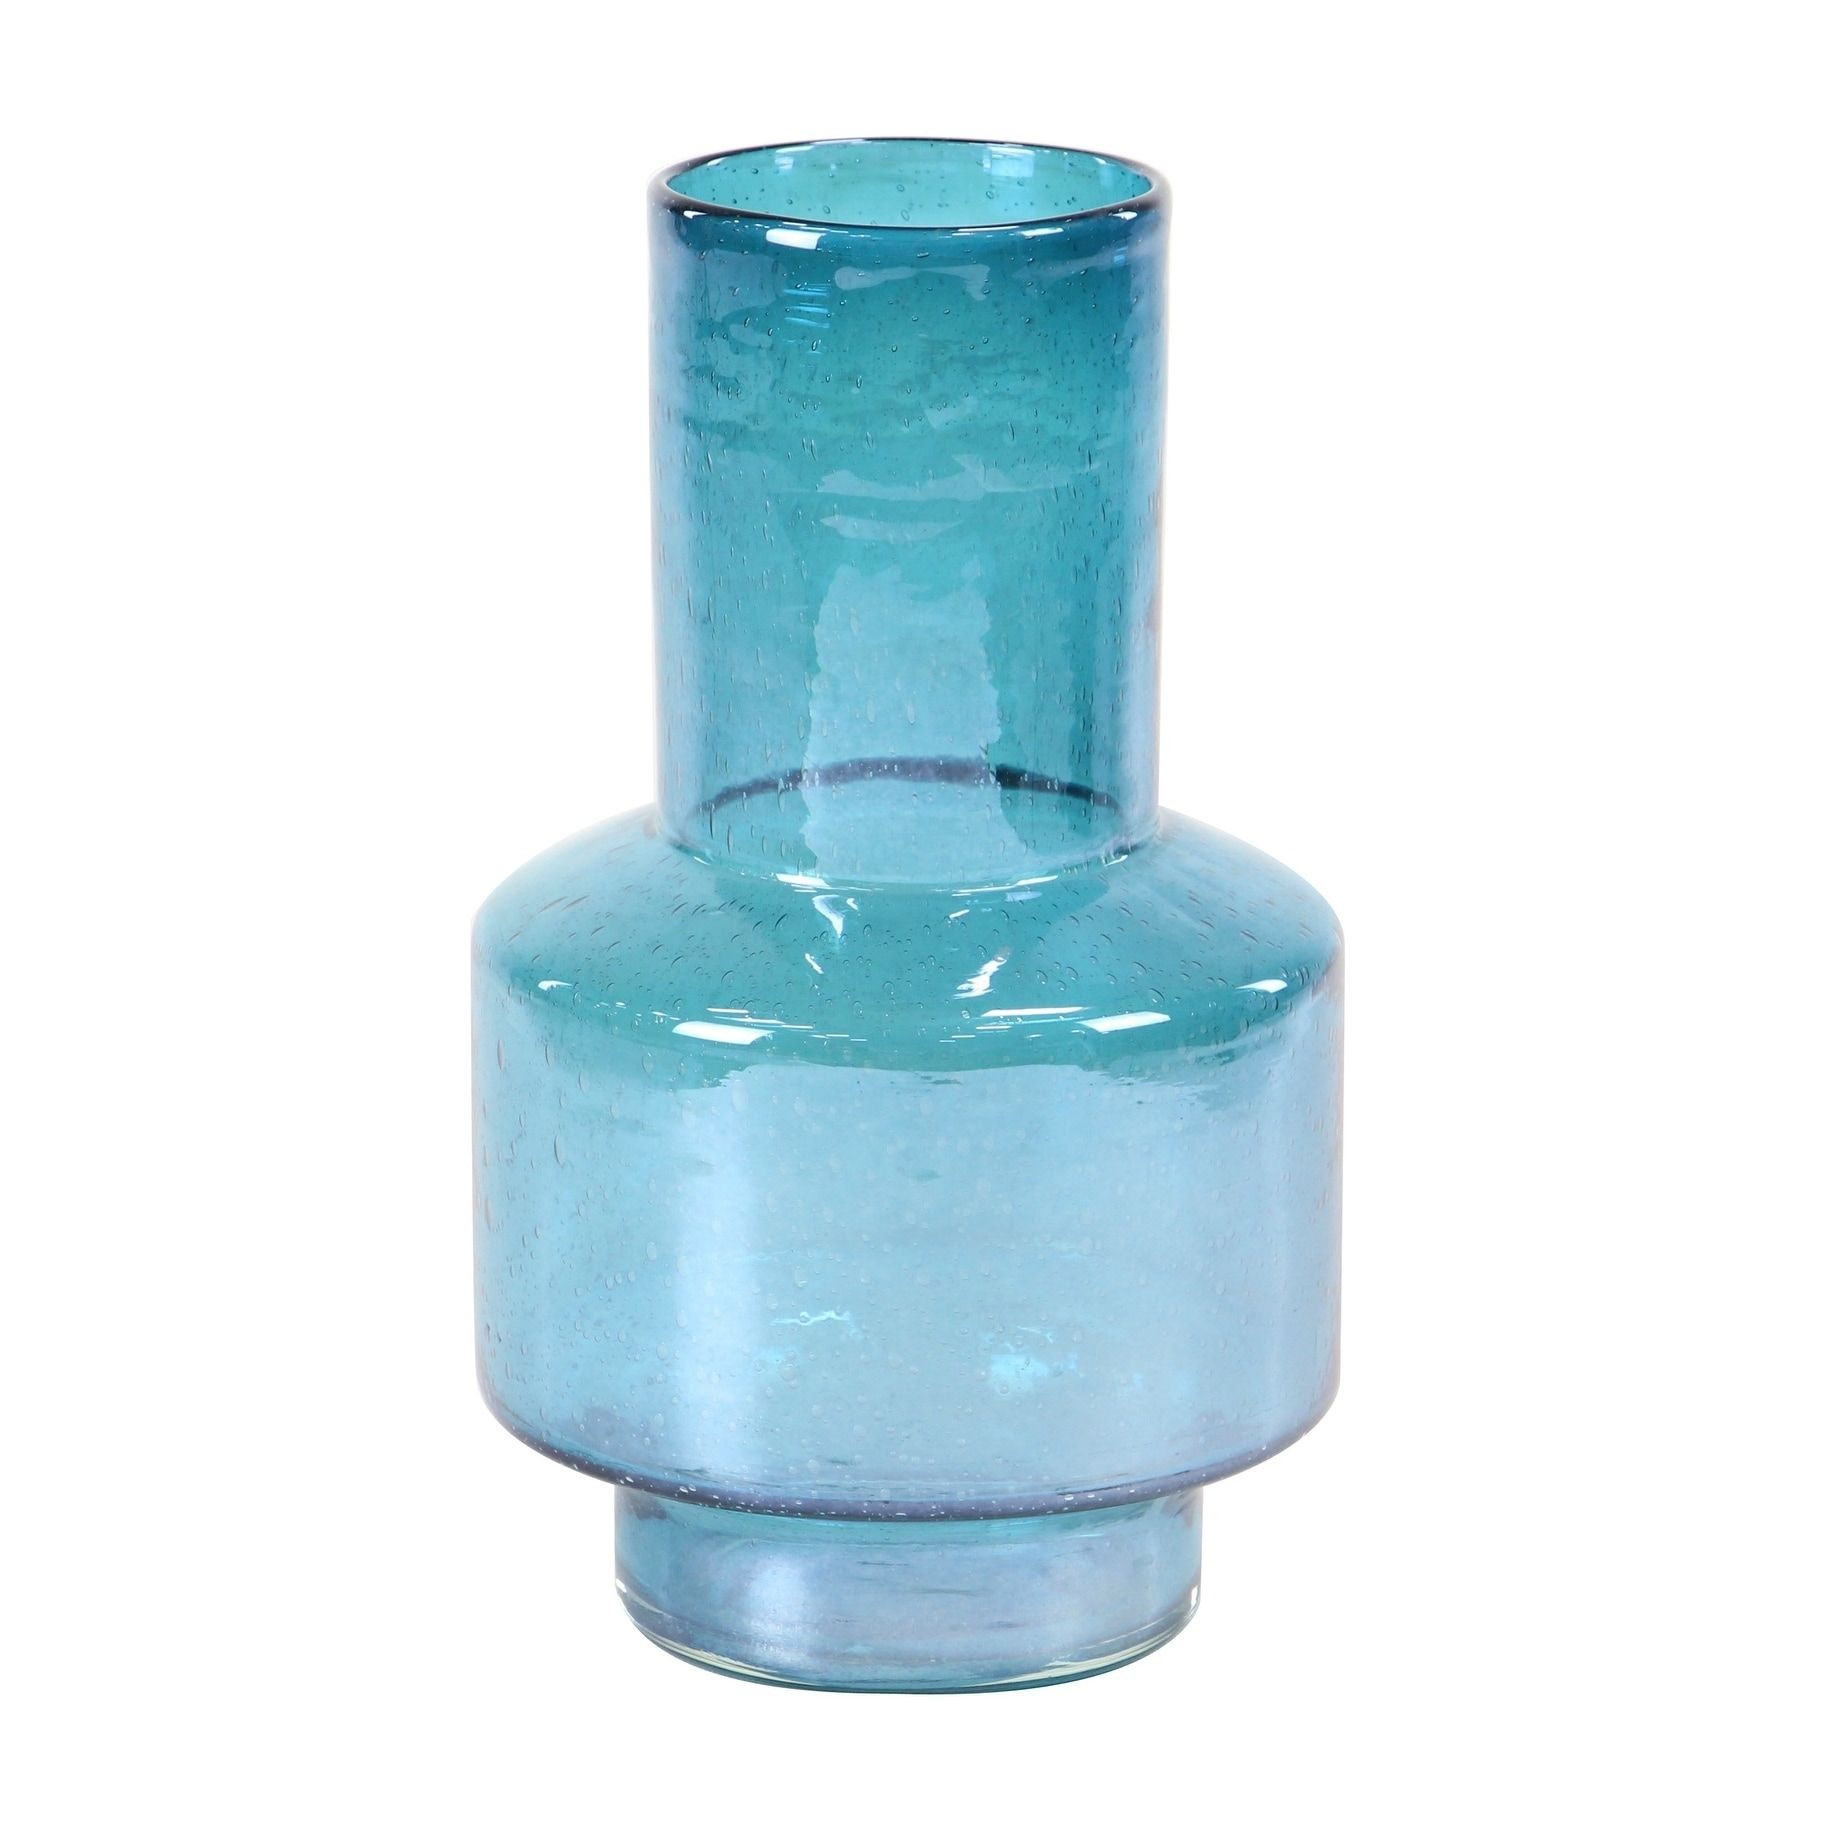 28 Unique 8 Glass Cylinder Vase 2024 free download 8 glass cylinder vase of studio 350 eclectic 13 x 8 inch blue handmade glass bud vase size in studio 350 eclectic 13 x 8 inch blue handmade glass bud vase size medium 8 15